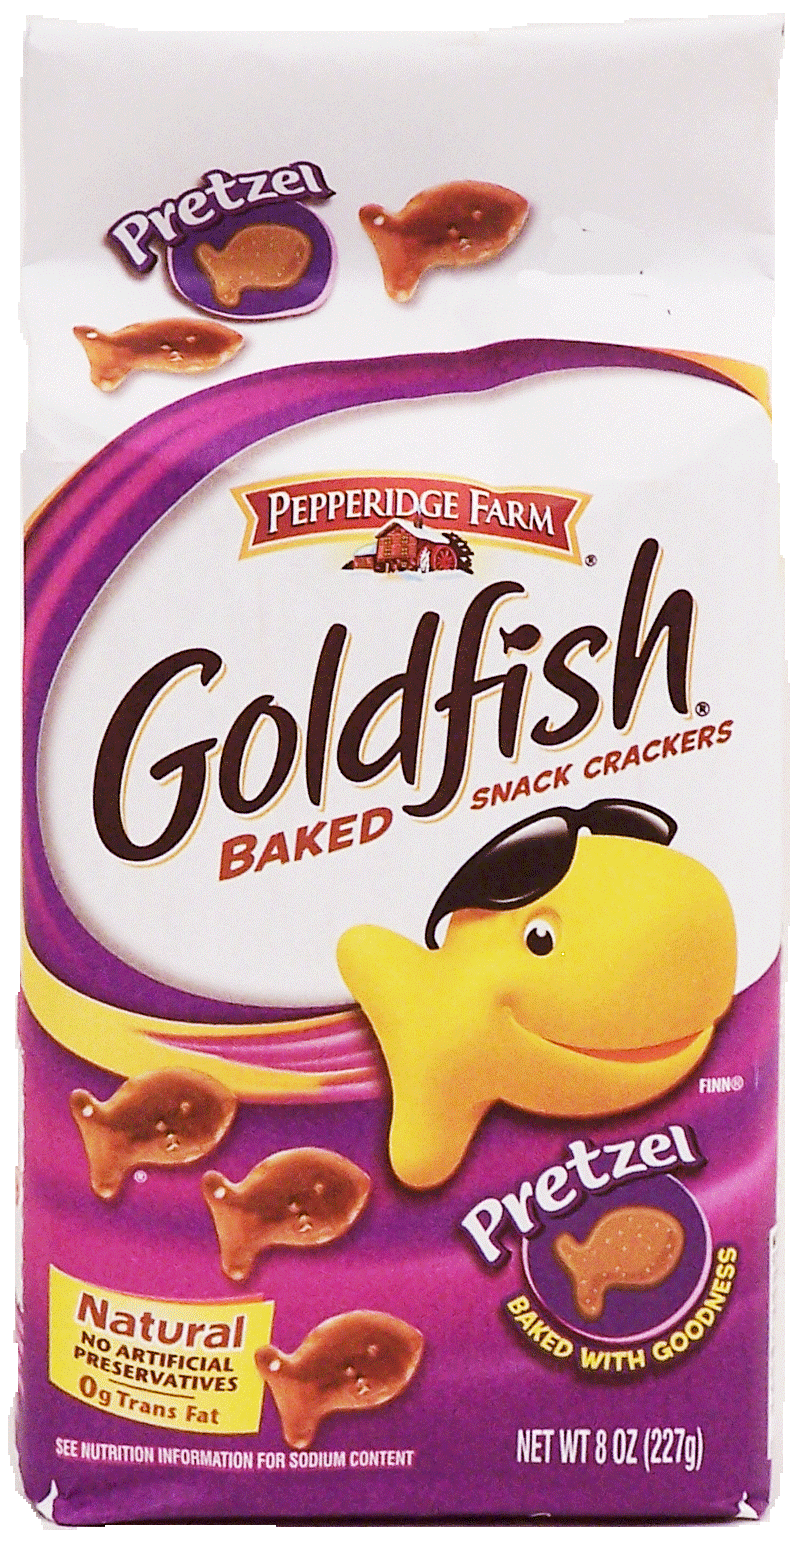 Pepperidge Farm Goldfish pretzel baked snack crackers Full-Size Picture